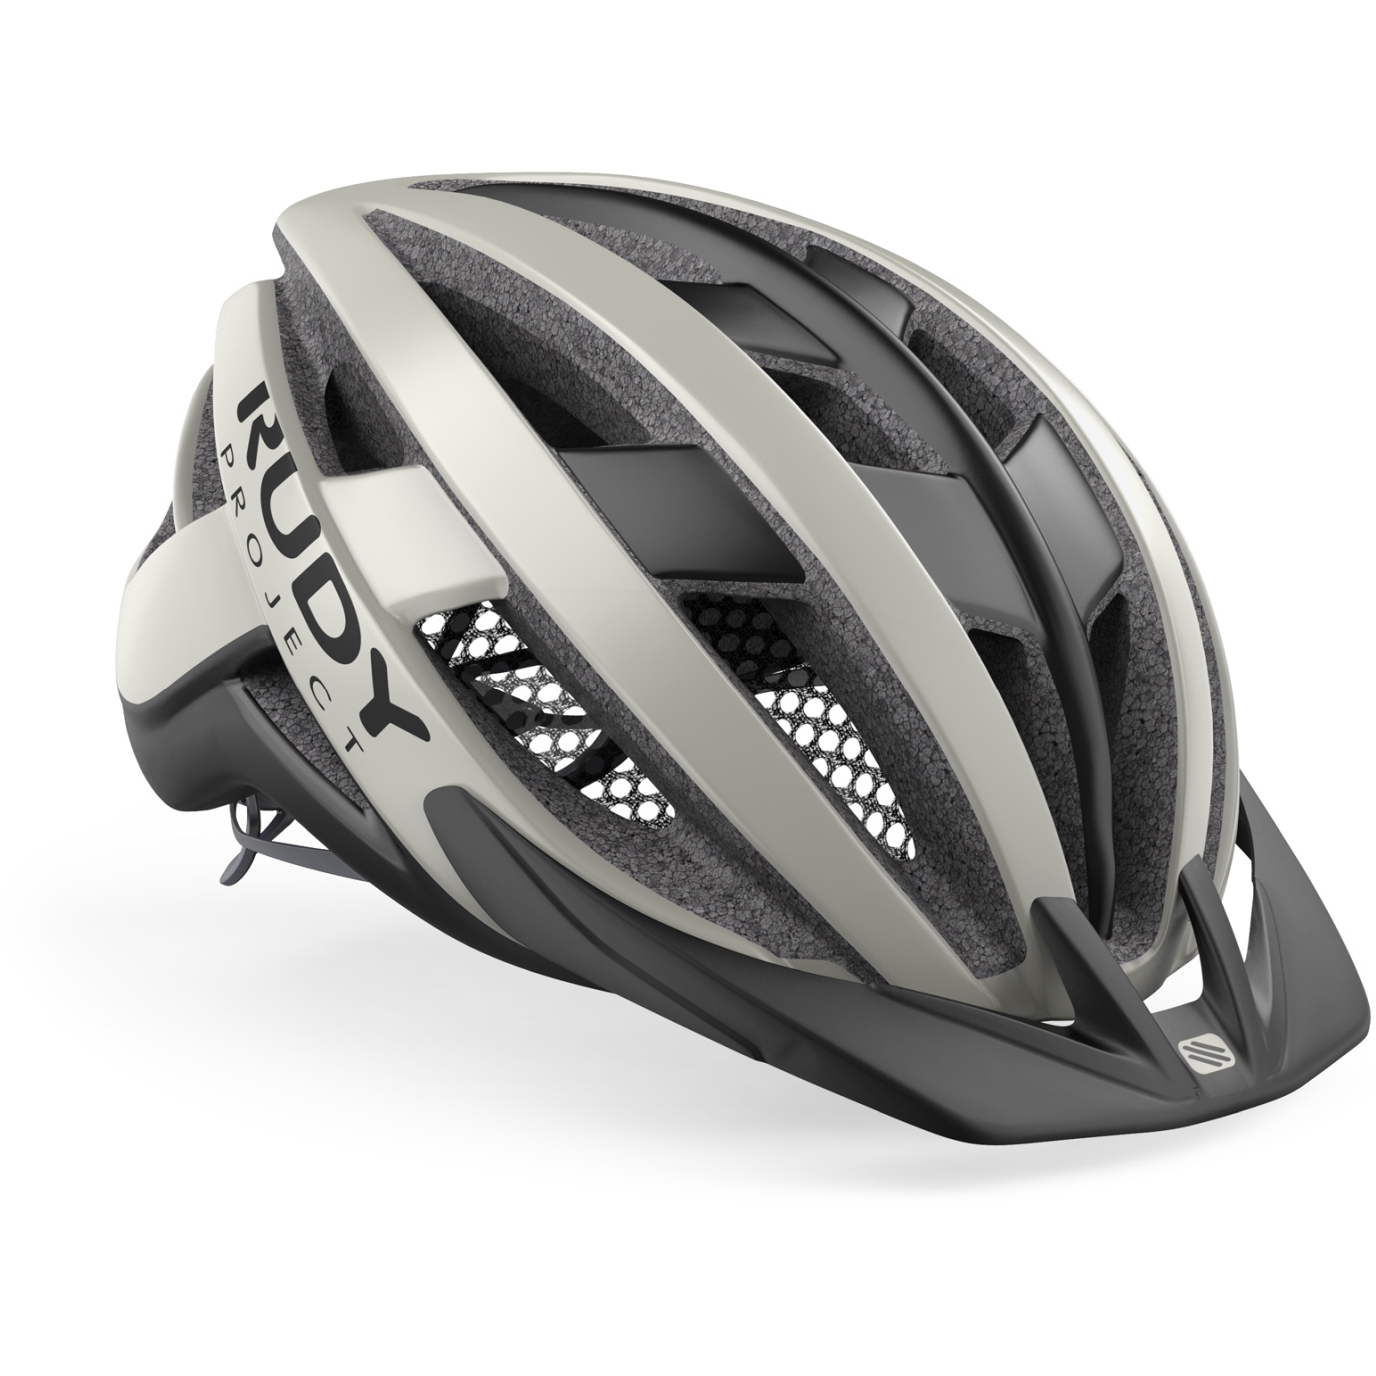 Picture of Rudy Project Venger Cross Helmet - Light Grey/Black (Matte)